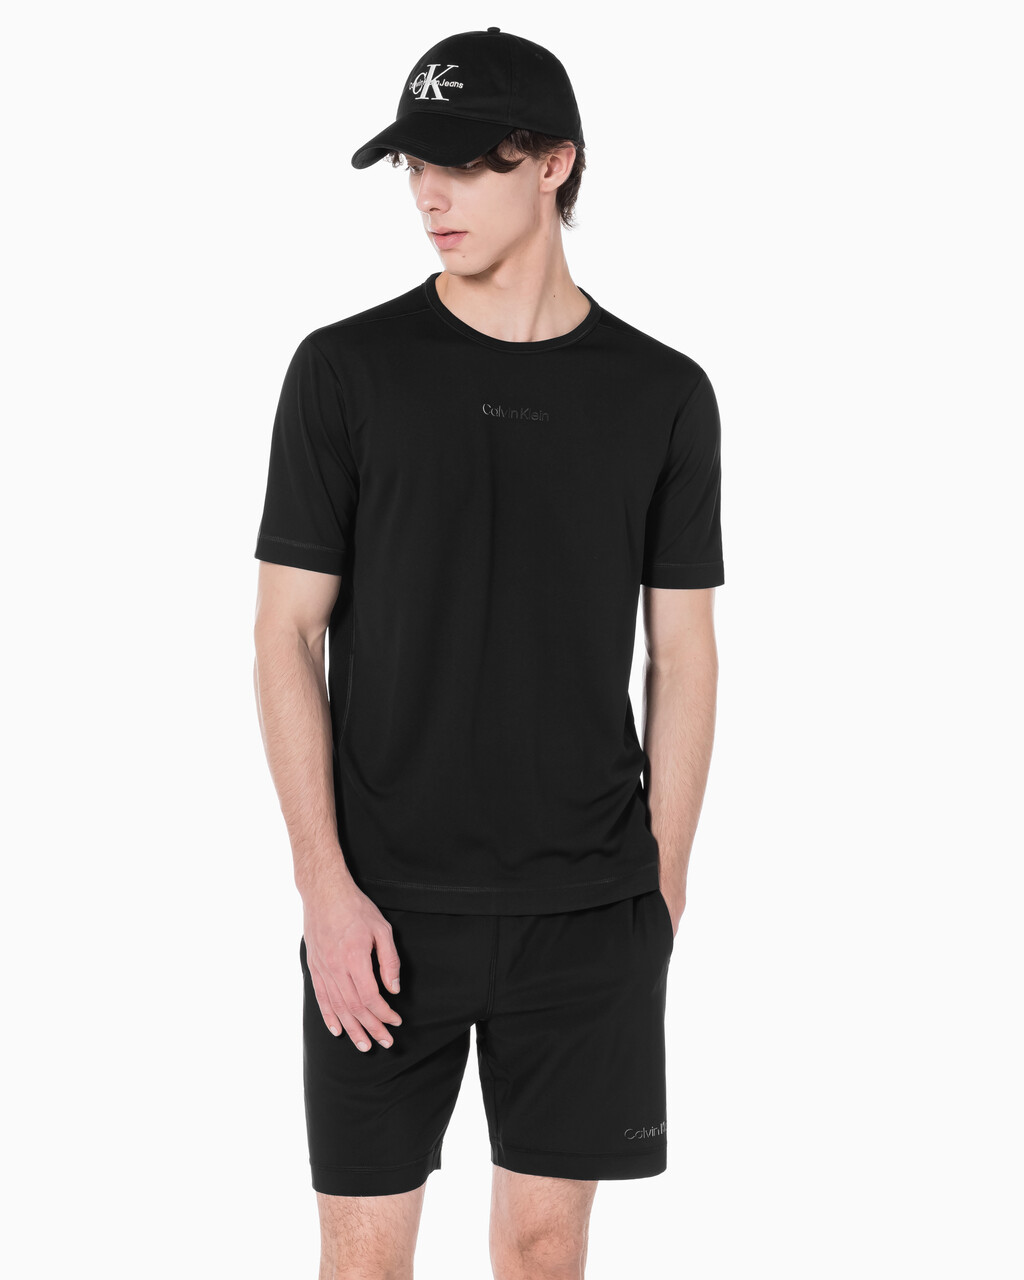 Buy 남성 레귤러 핏 숏슬리브 티셔츠 in color BLACK